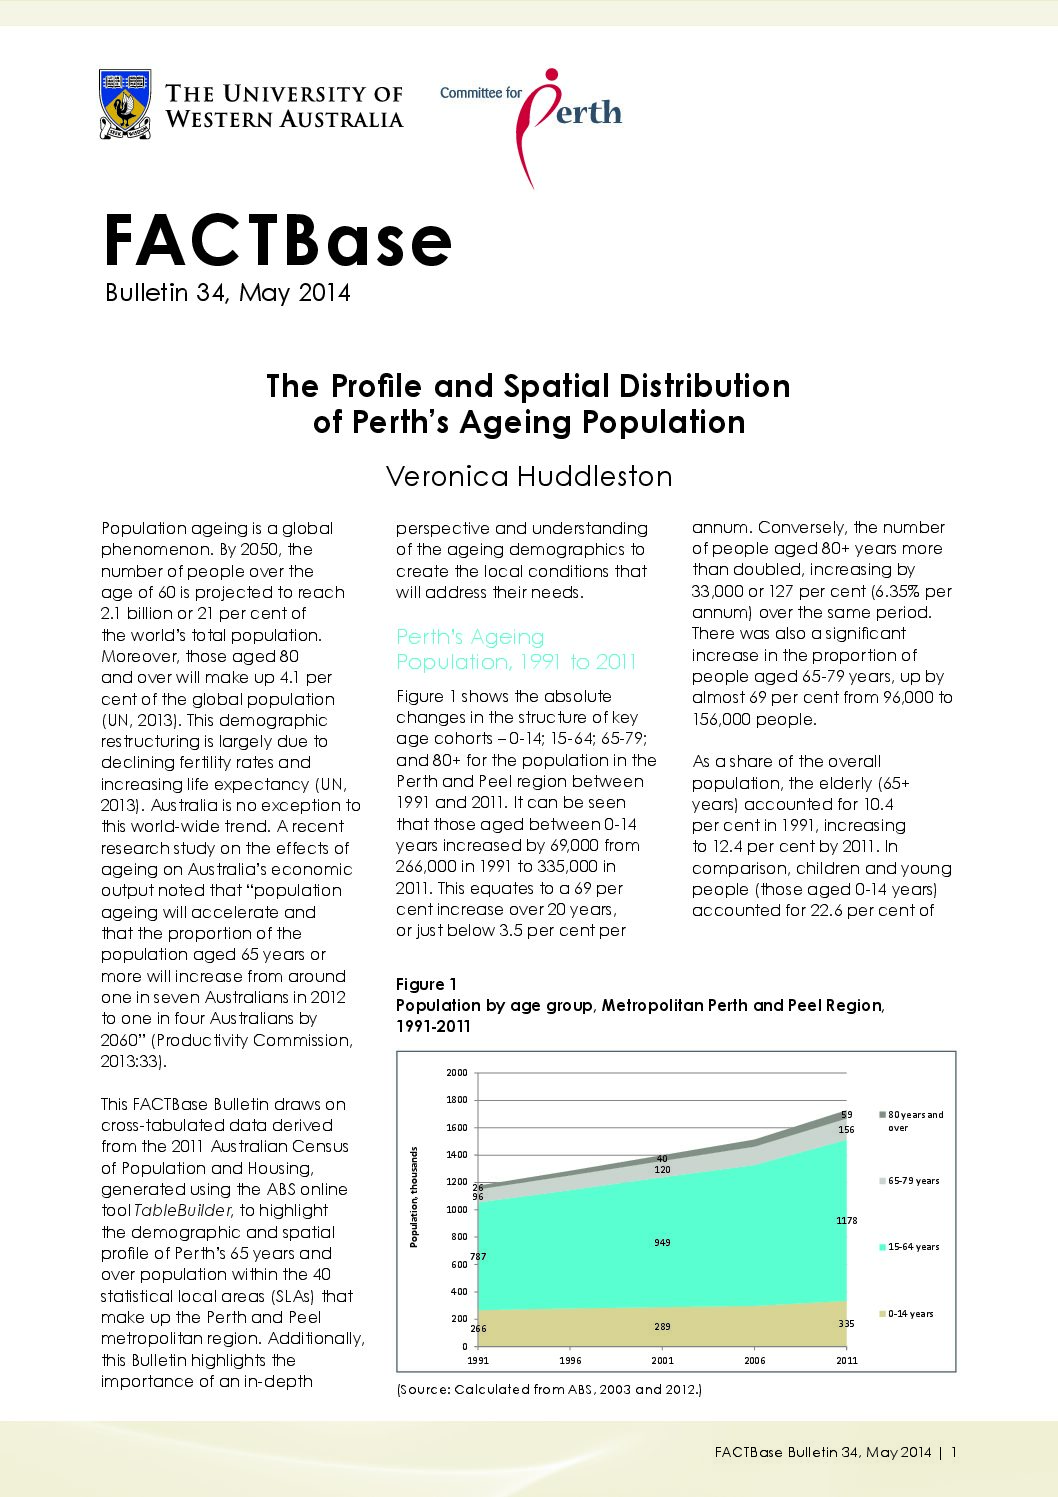 FACTBase Bulletin 34 - May 2014